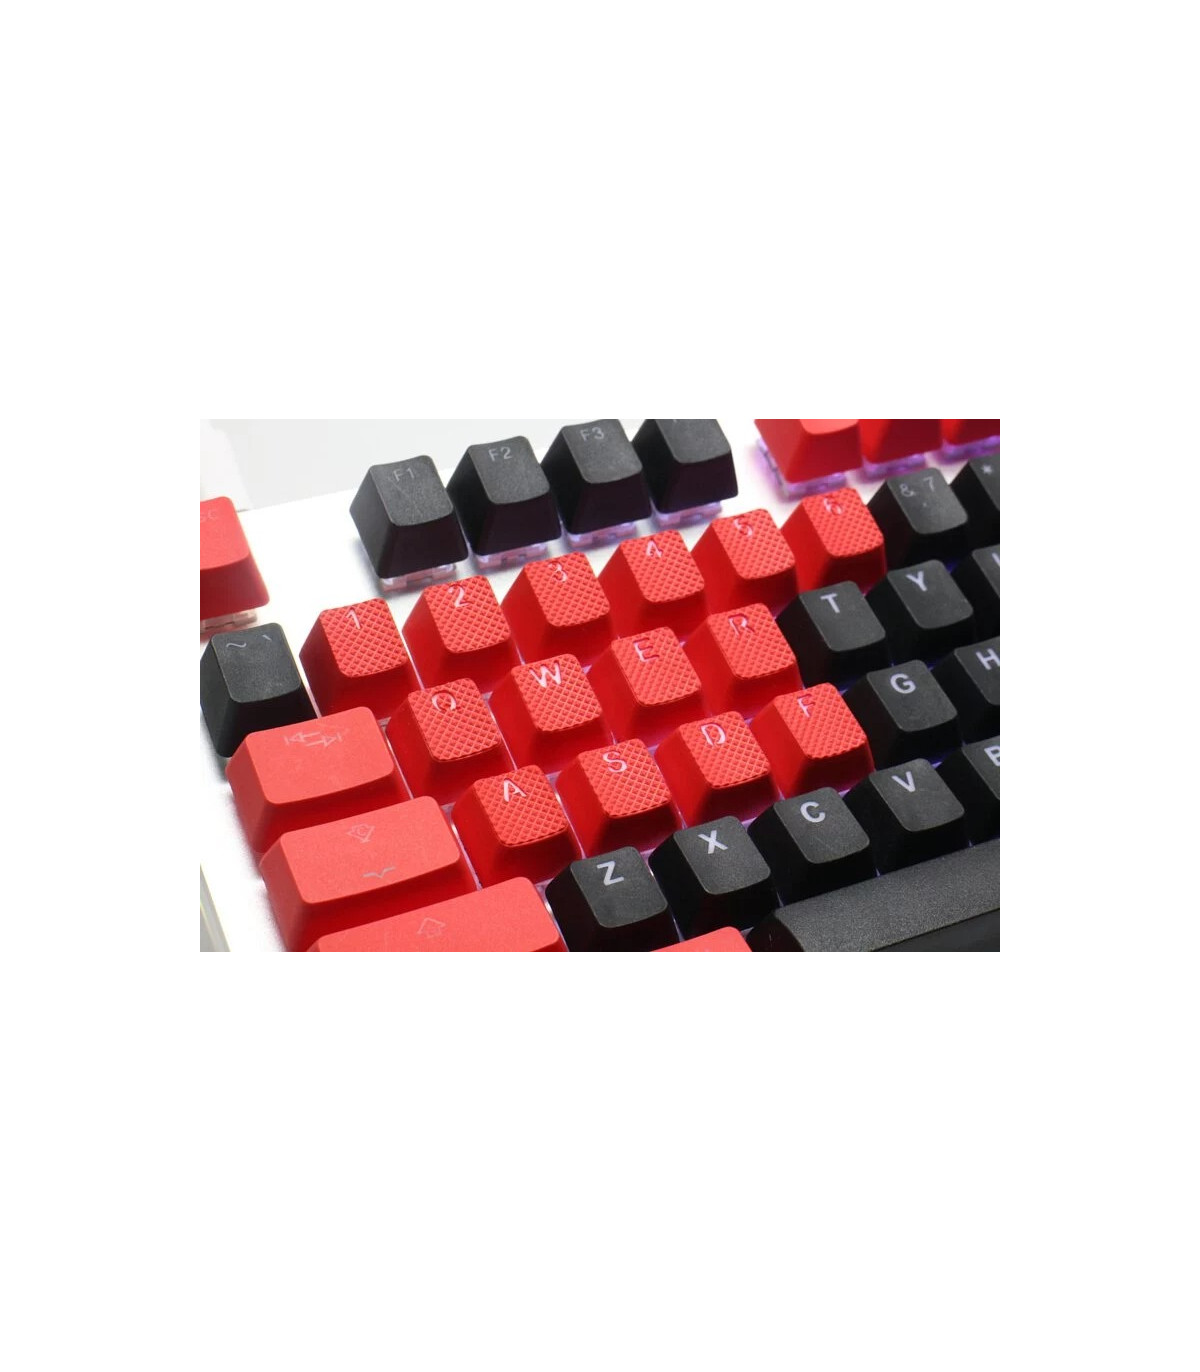 Tai-Hao 18-Key Rubber Keycap Red